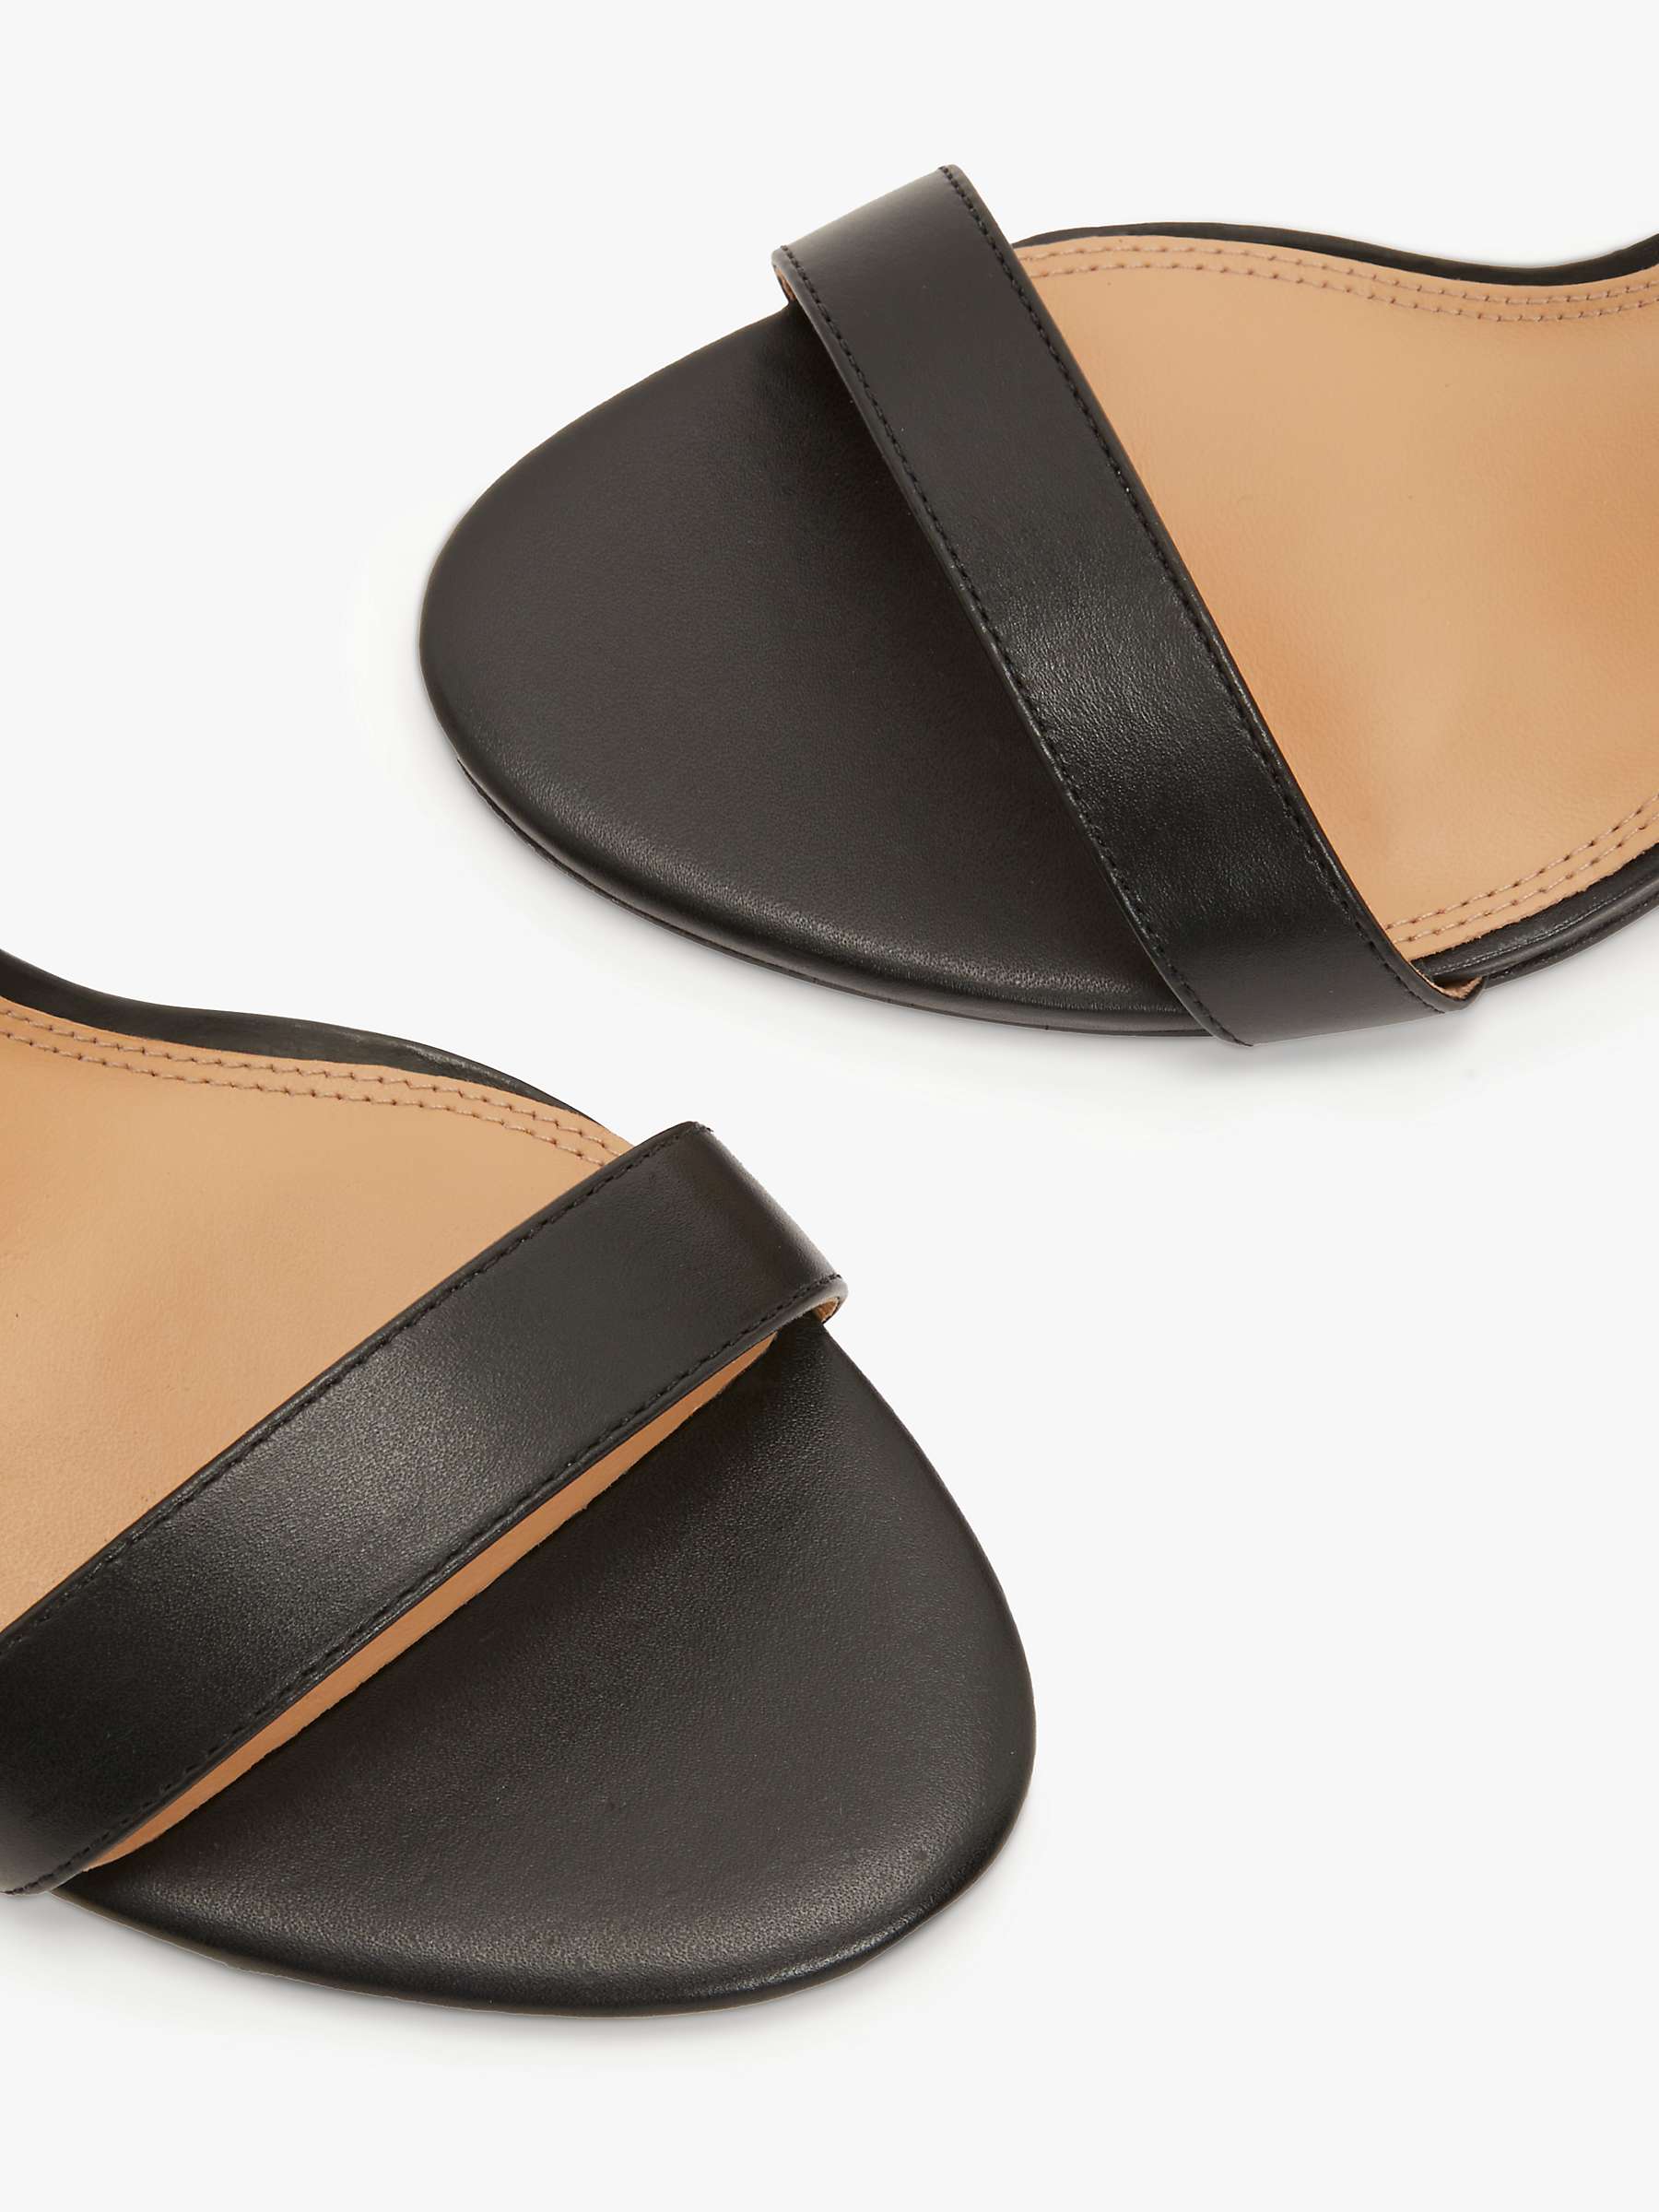 Buy John Lewis Merry Leather Stiletto Heel Sandals Online at johnlewis.com